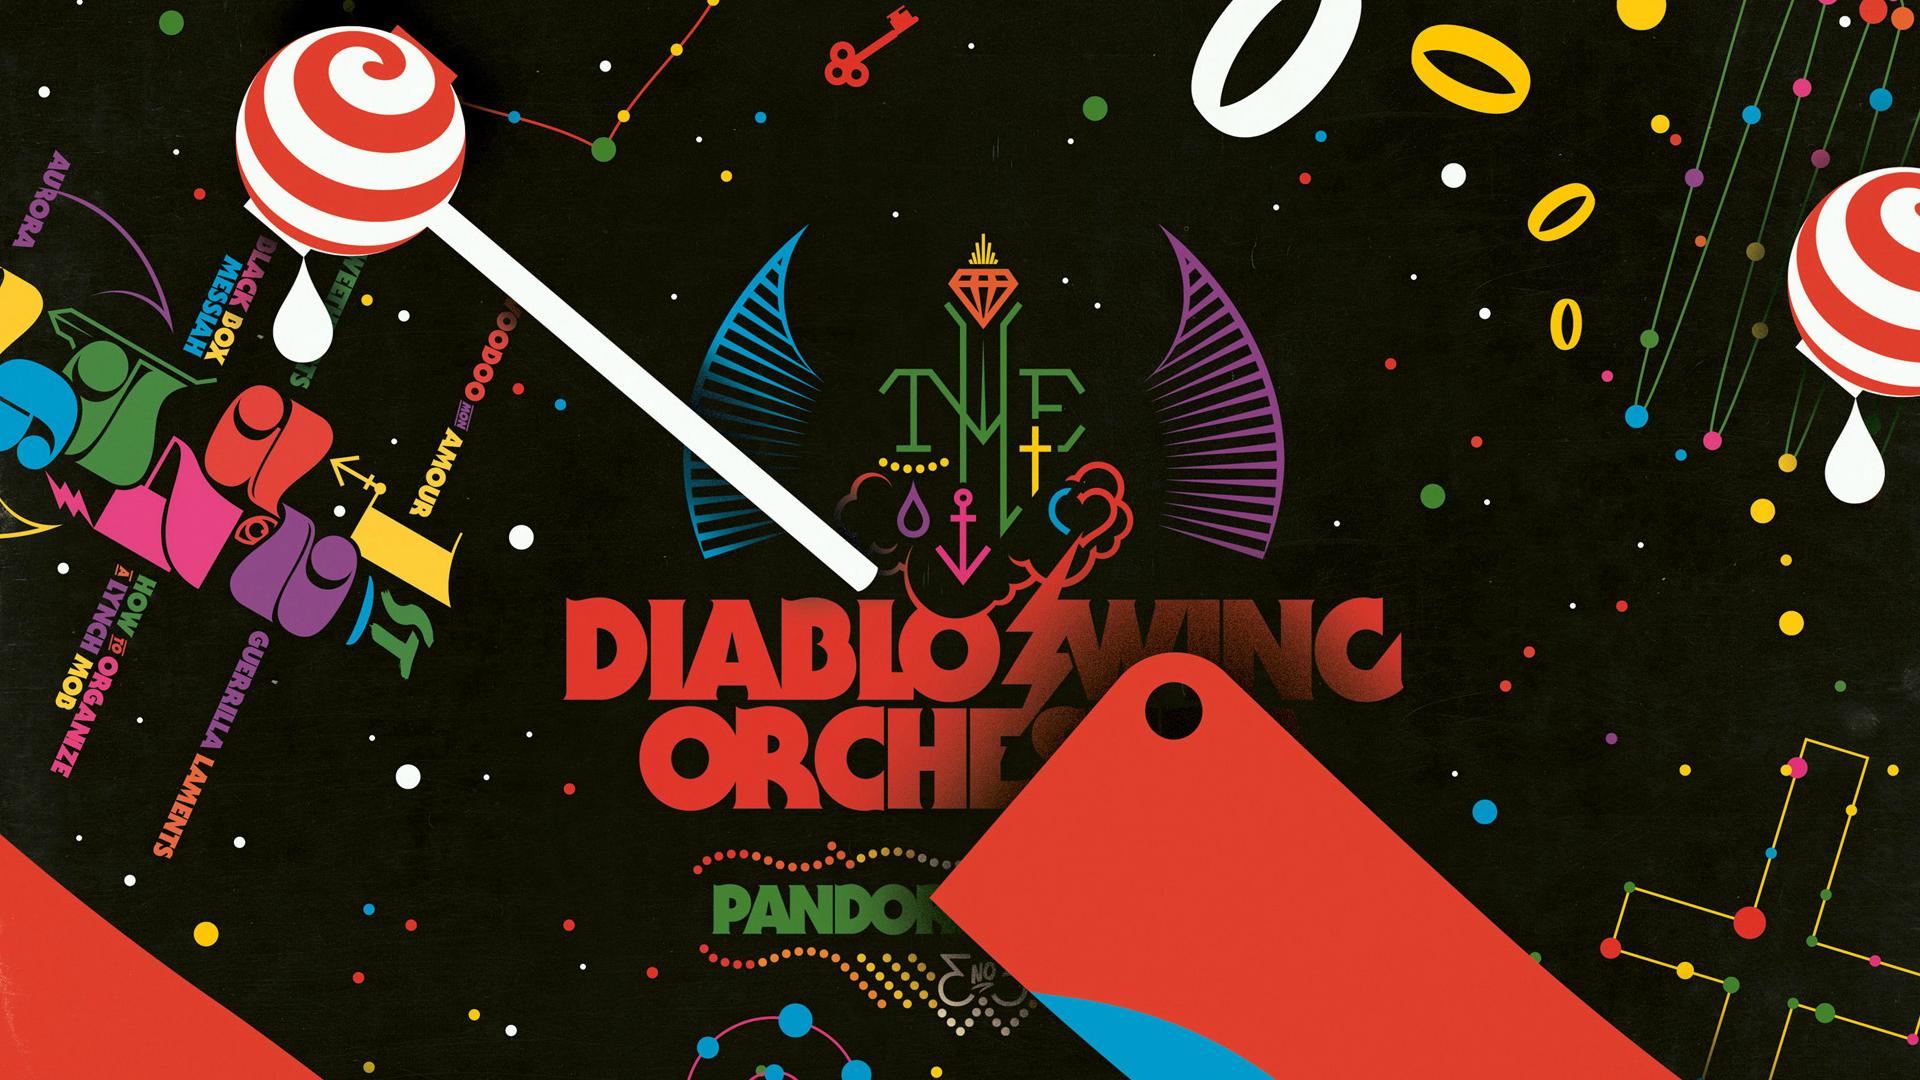 Diablo Swing Orchestra Pandoras Pi Ata Wallpaper